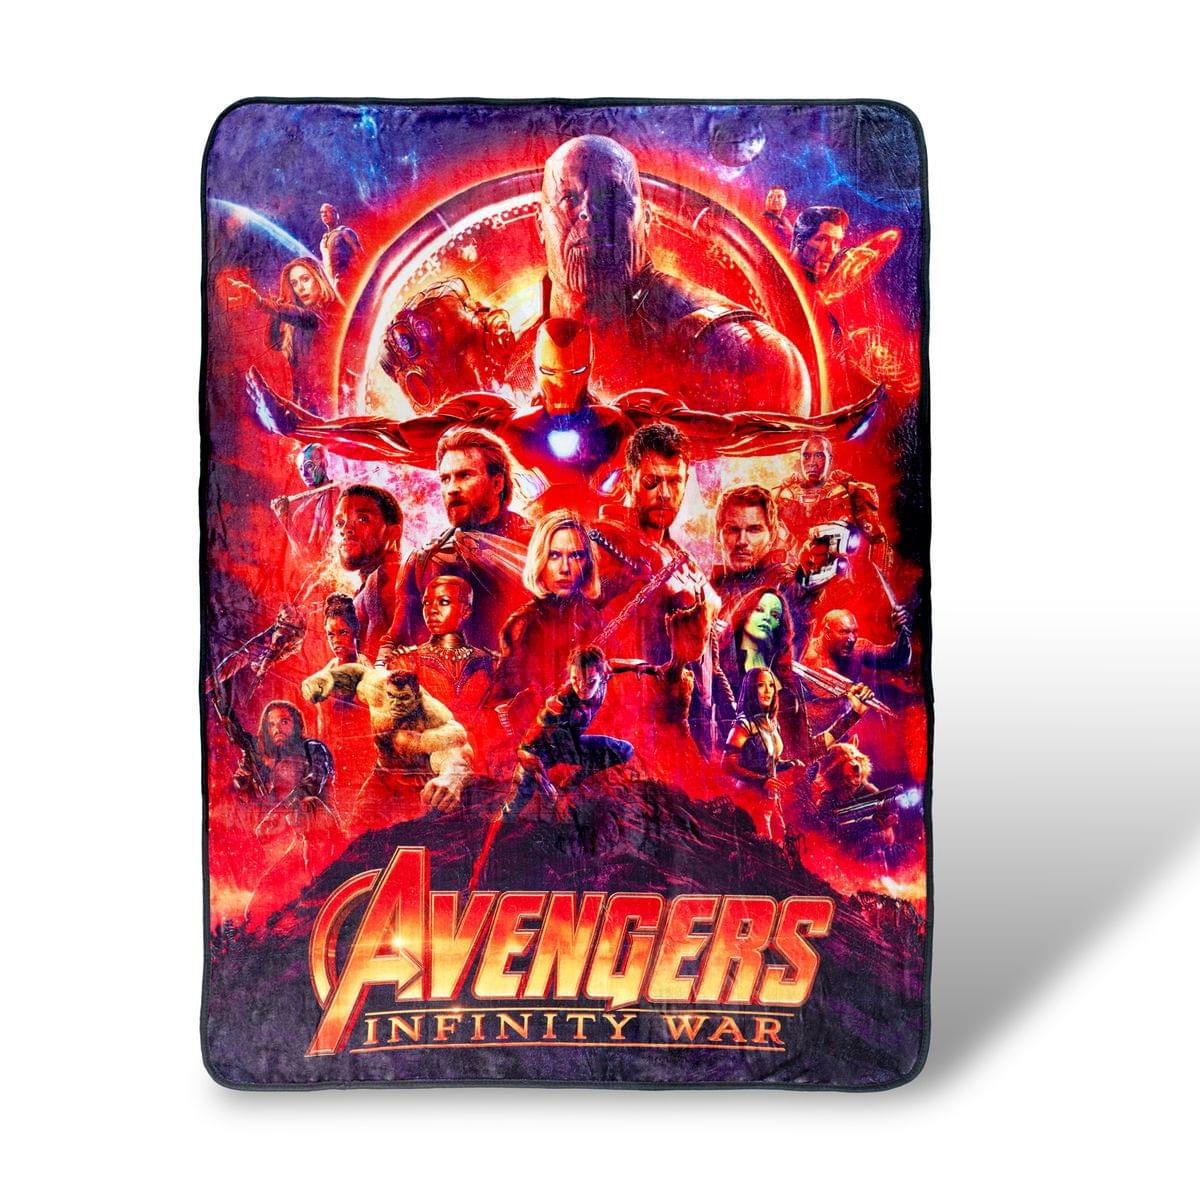 Avengers Infinity War Lightweight Fleece Throw Blanket, 45x60 Inches